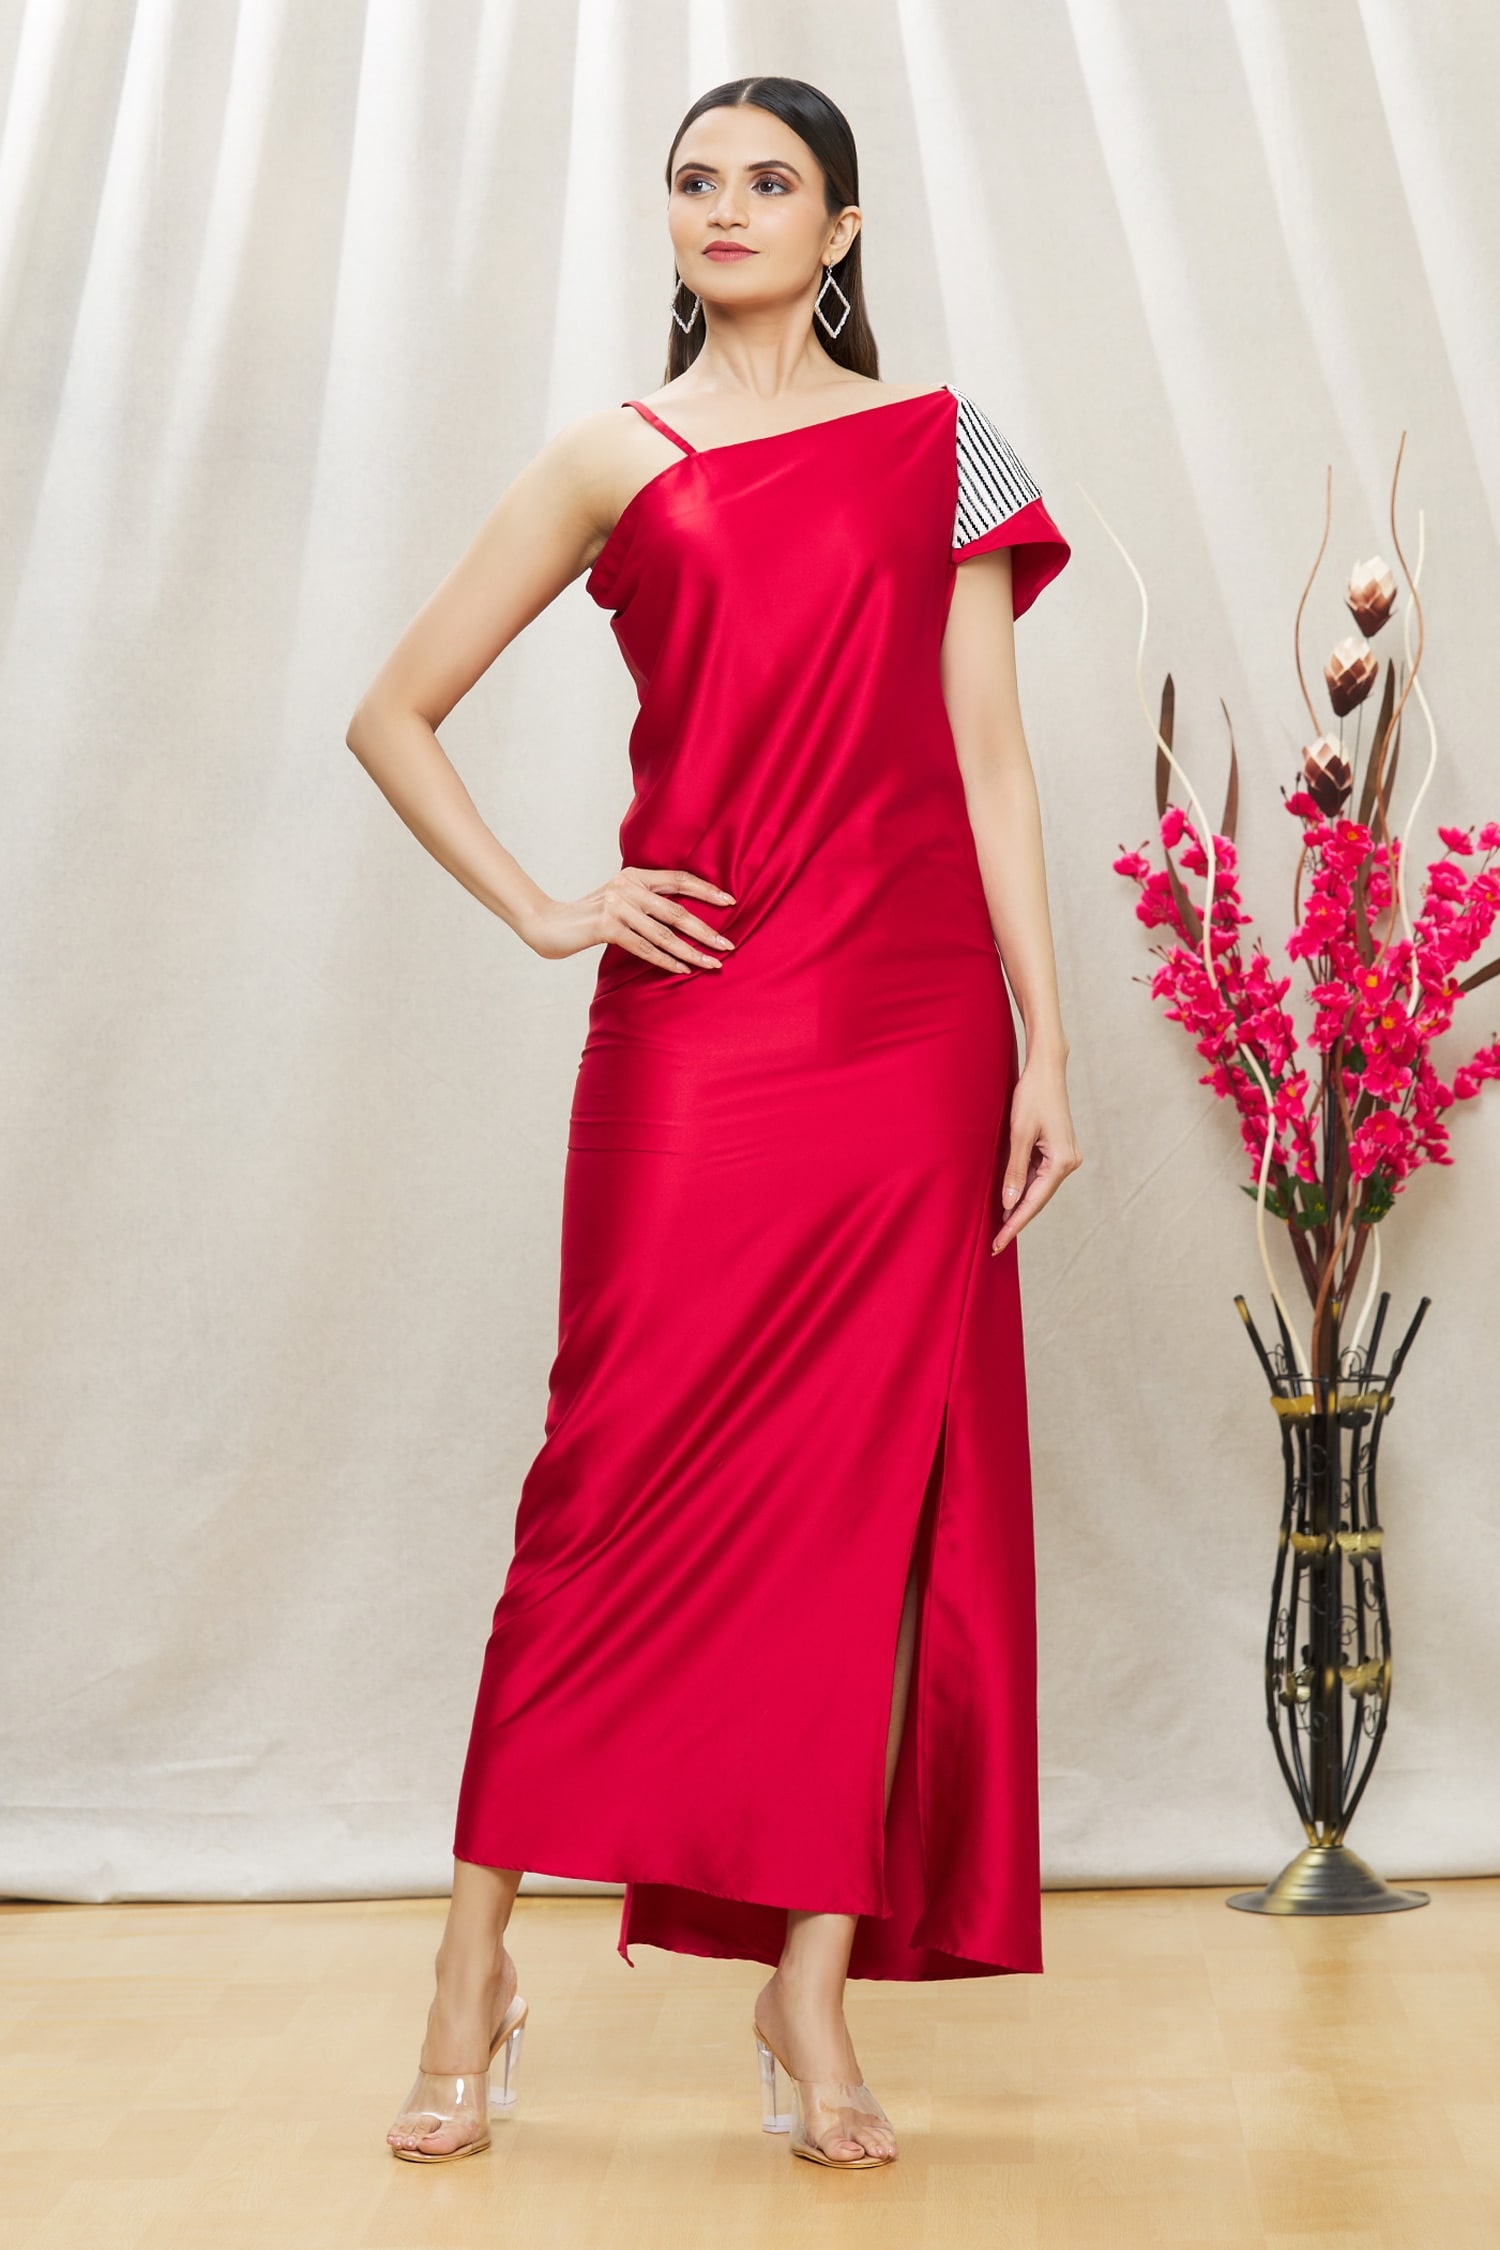 Red Satin Ballgown Prom Dress | Red Carpet Ready